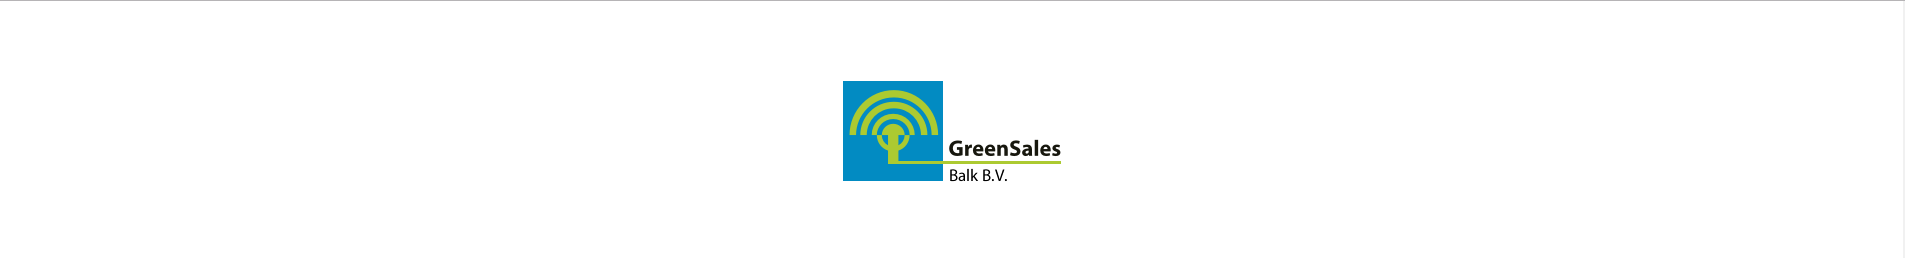 Greensales